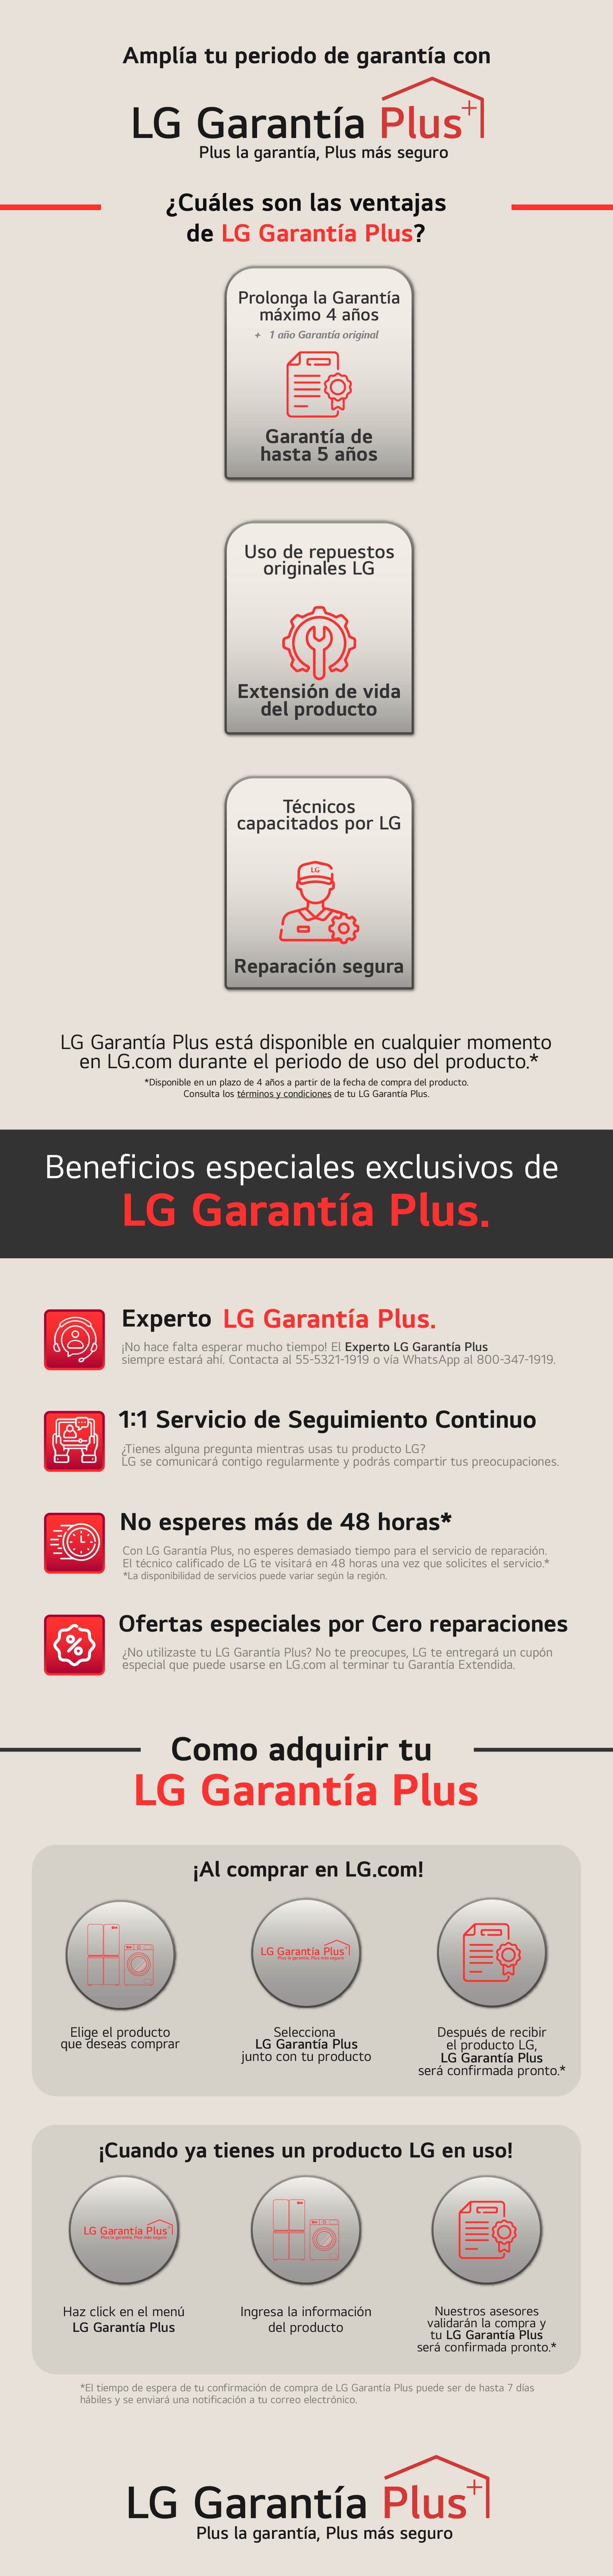 LG Garant Plus2 - Red - Desktop